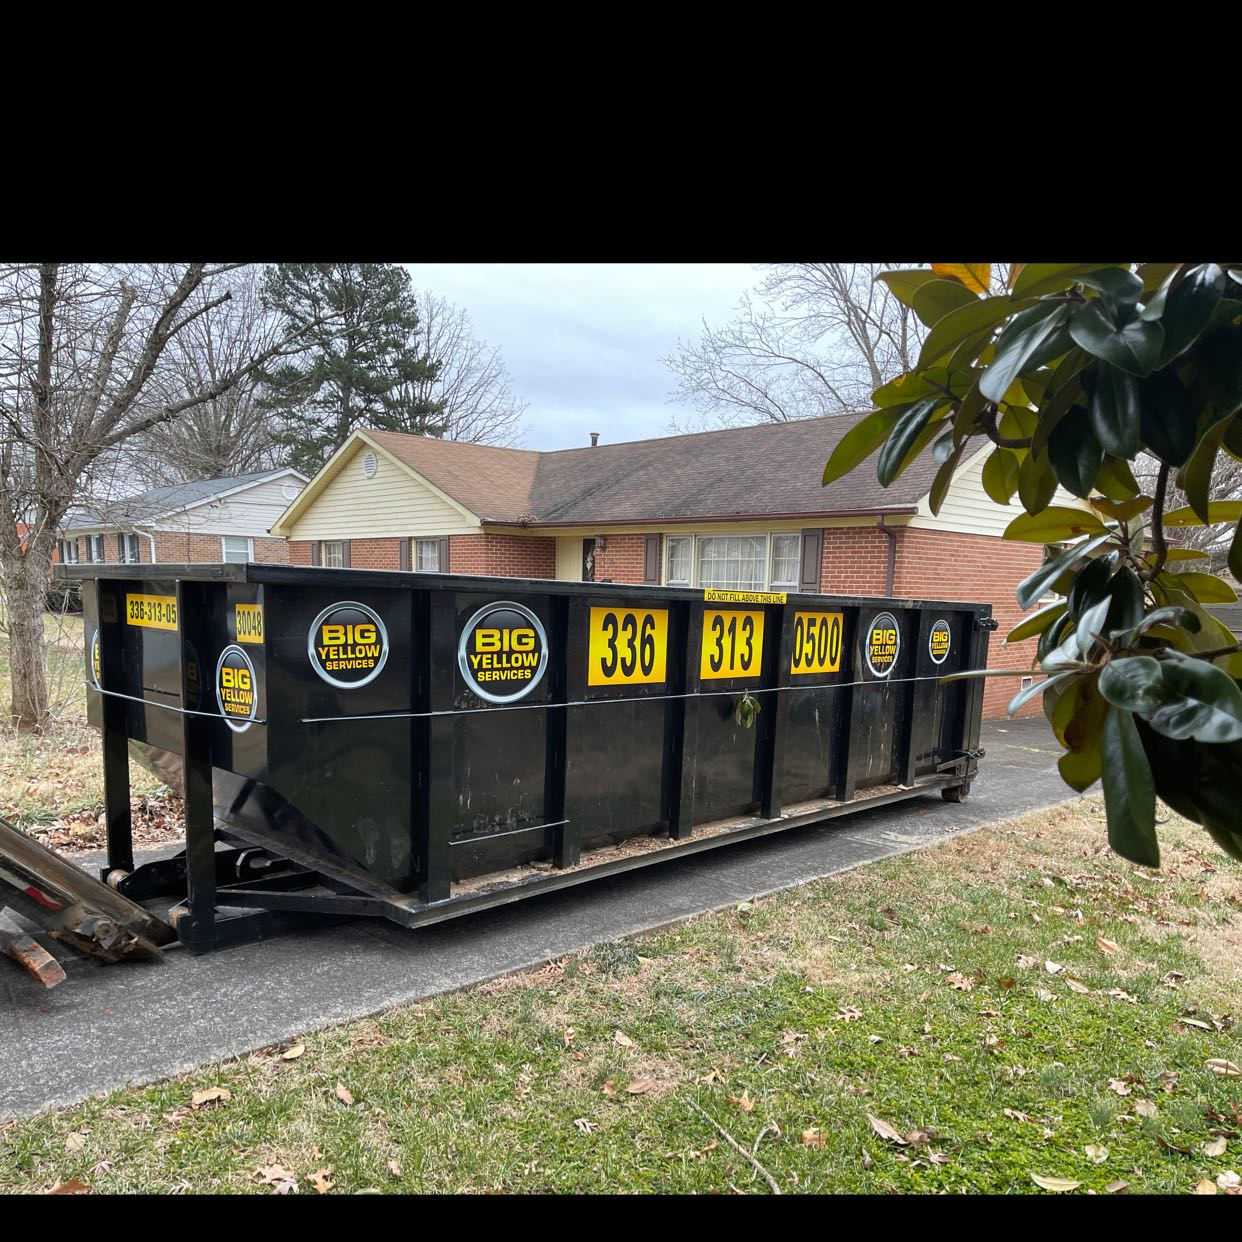 as93vdk13nbsigv7fmob Dumpster Rentals in Elon, NC | Roll-Off Dumpster and Portable Toilet Rentals | Big Yellow Services, LLC